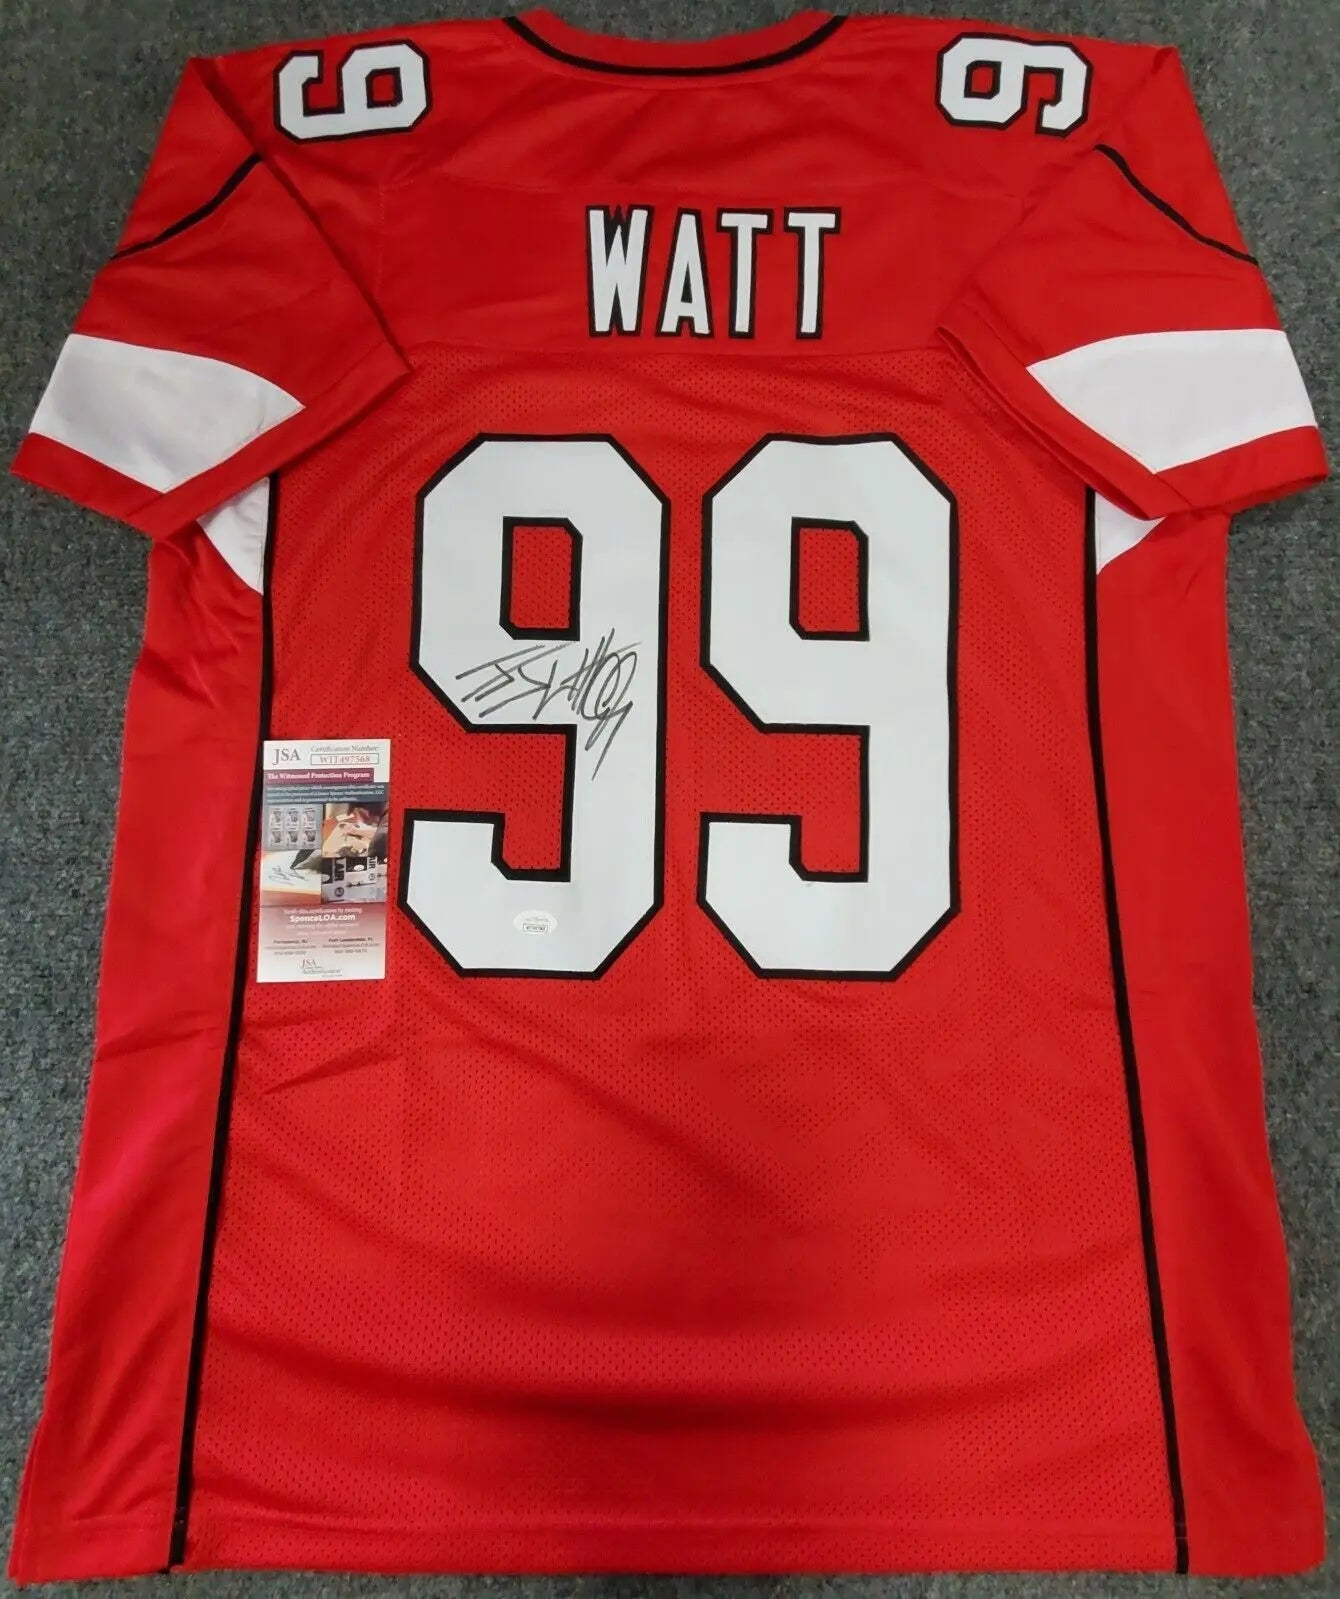 Watt signs with Cardinals